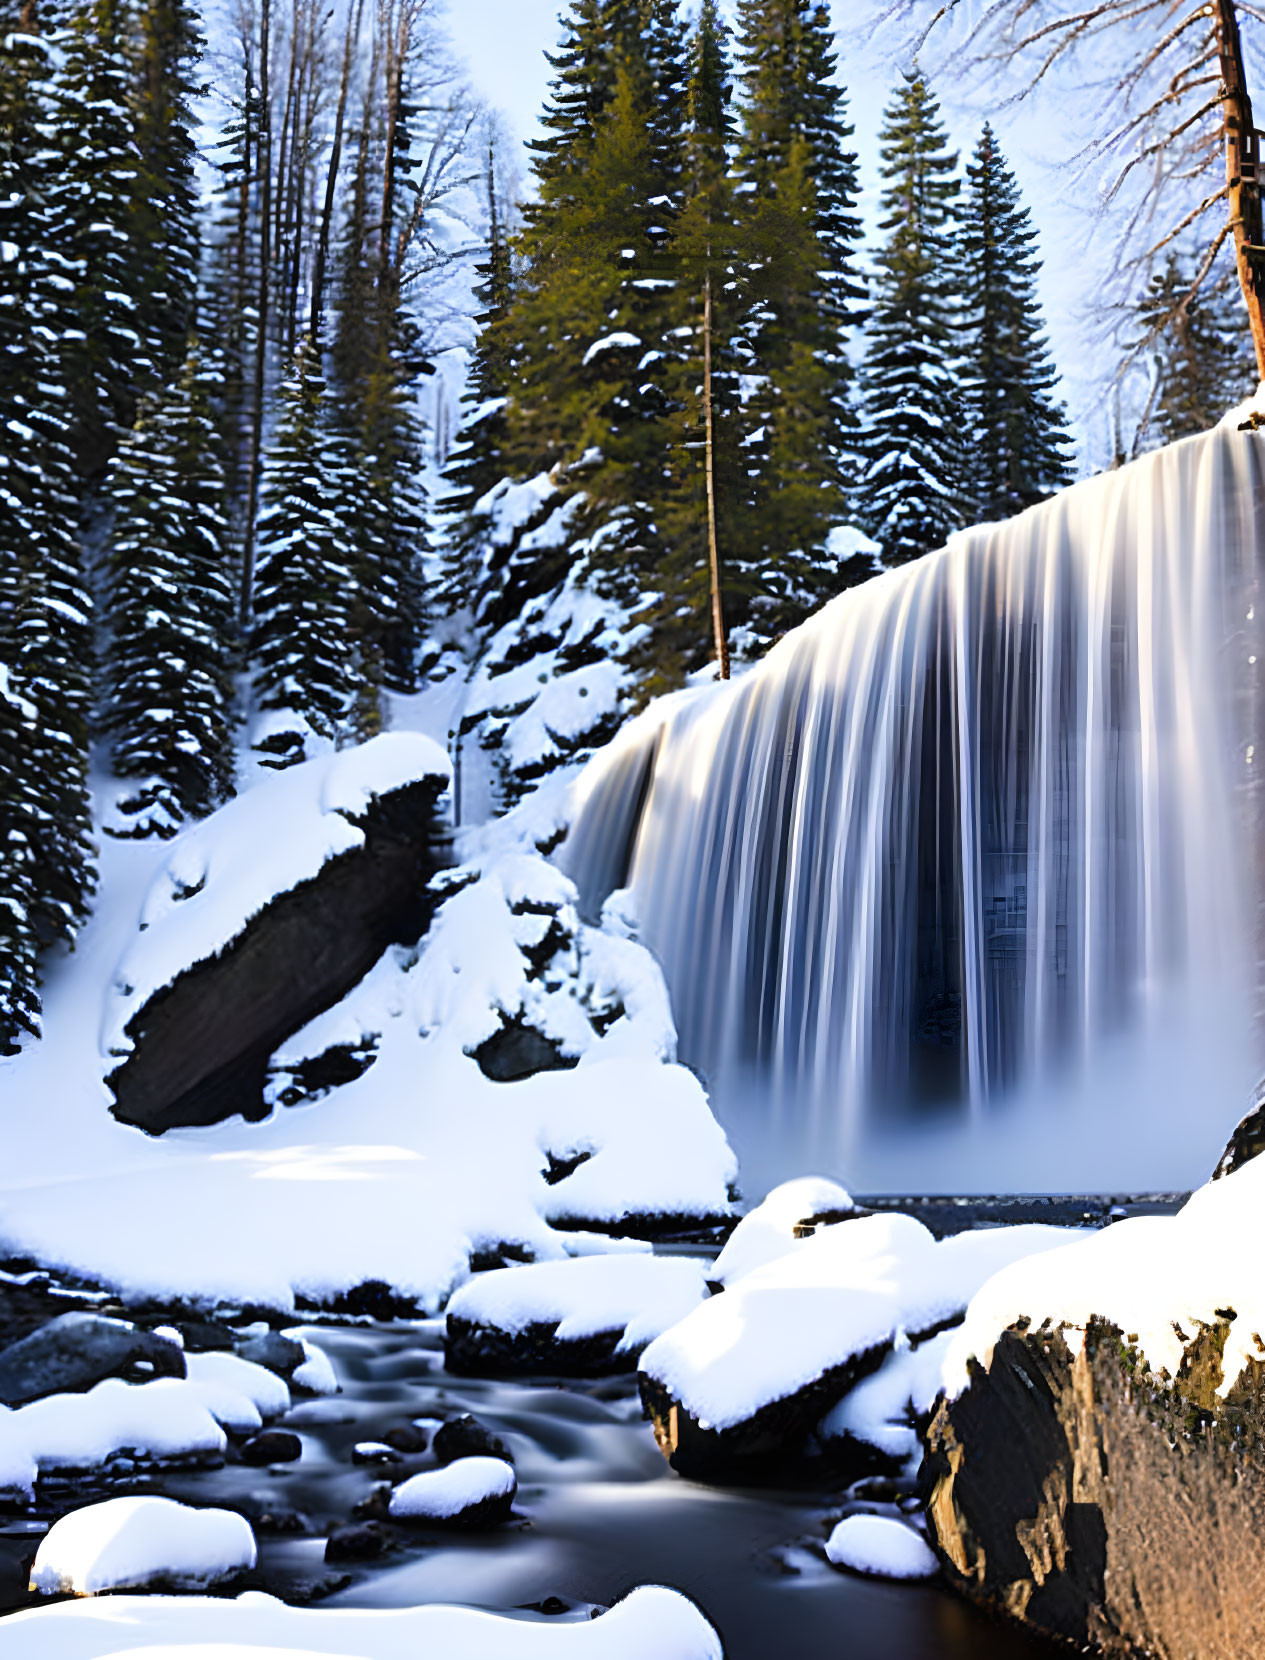 Snowy waterfall flowing into stream amidst winter scenery